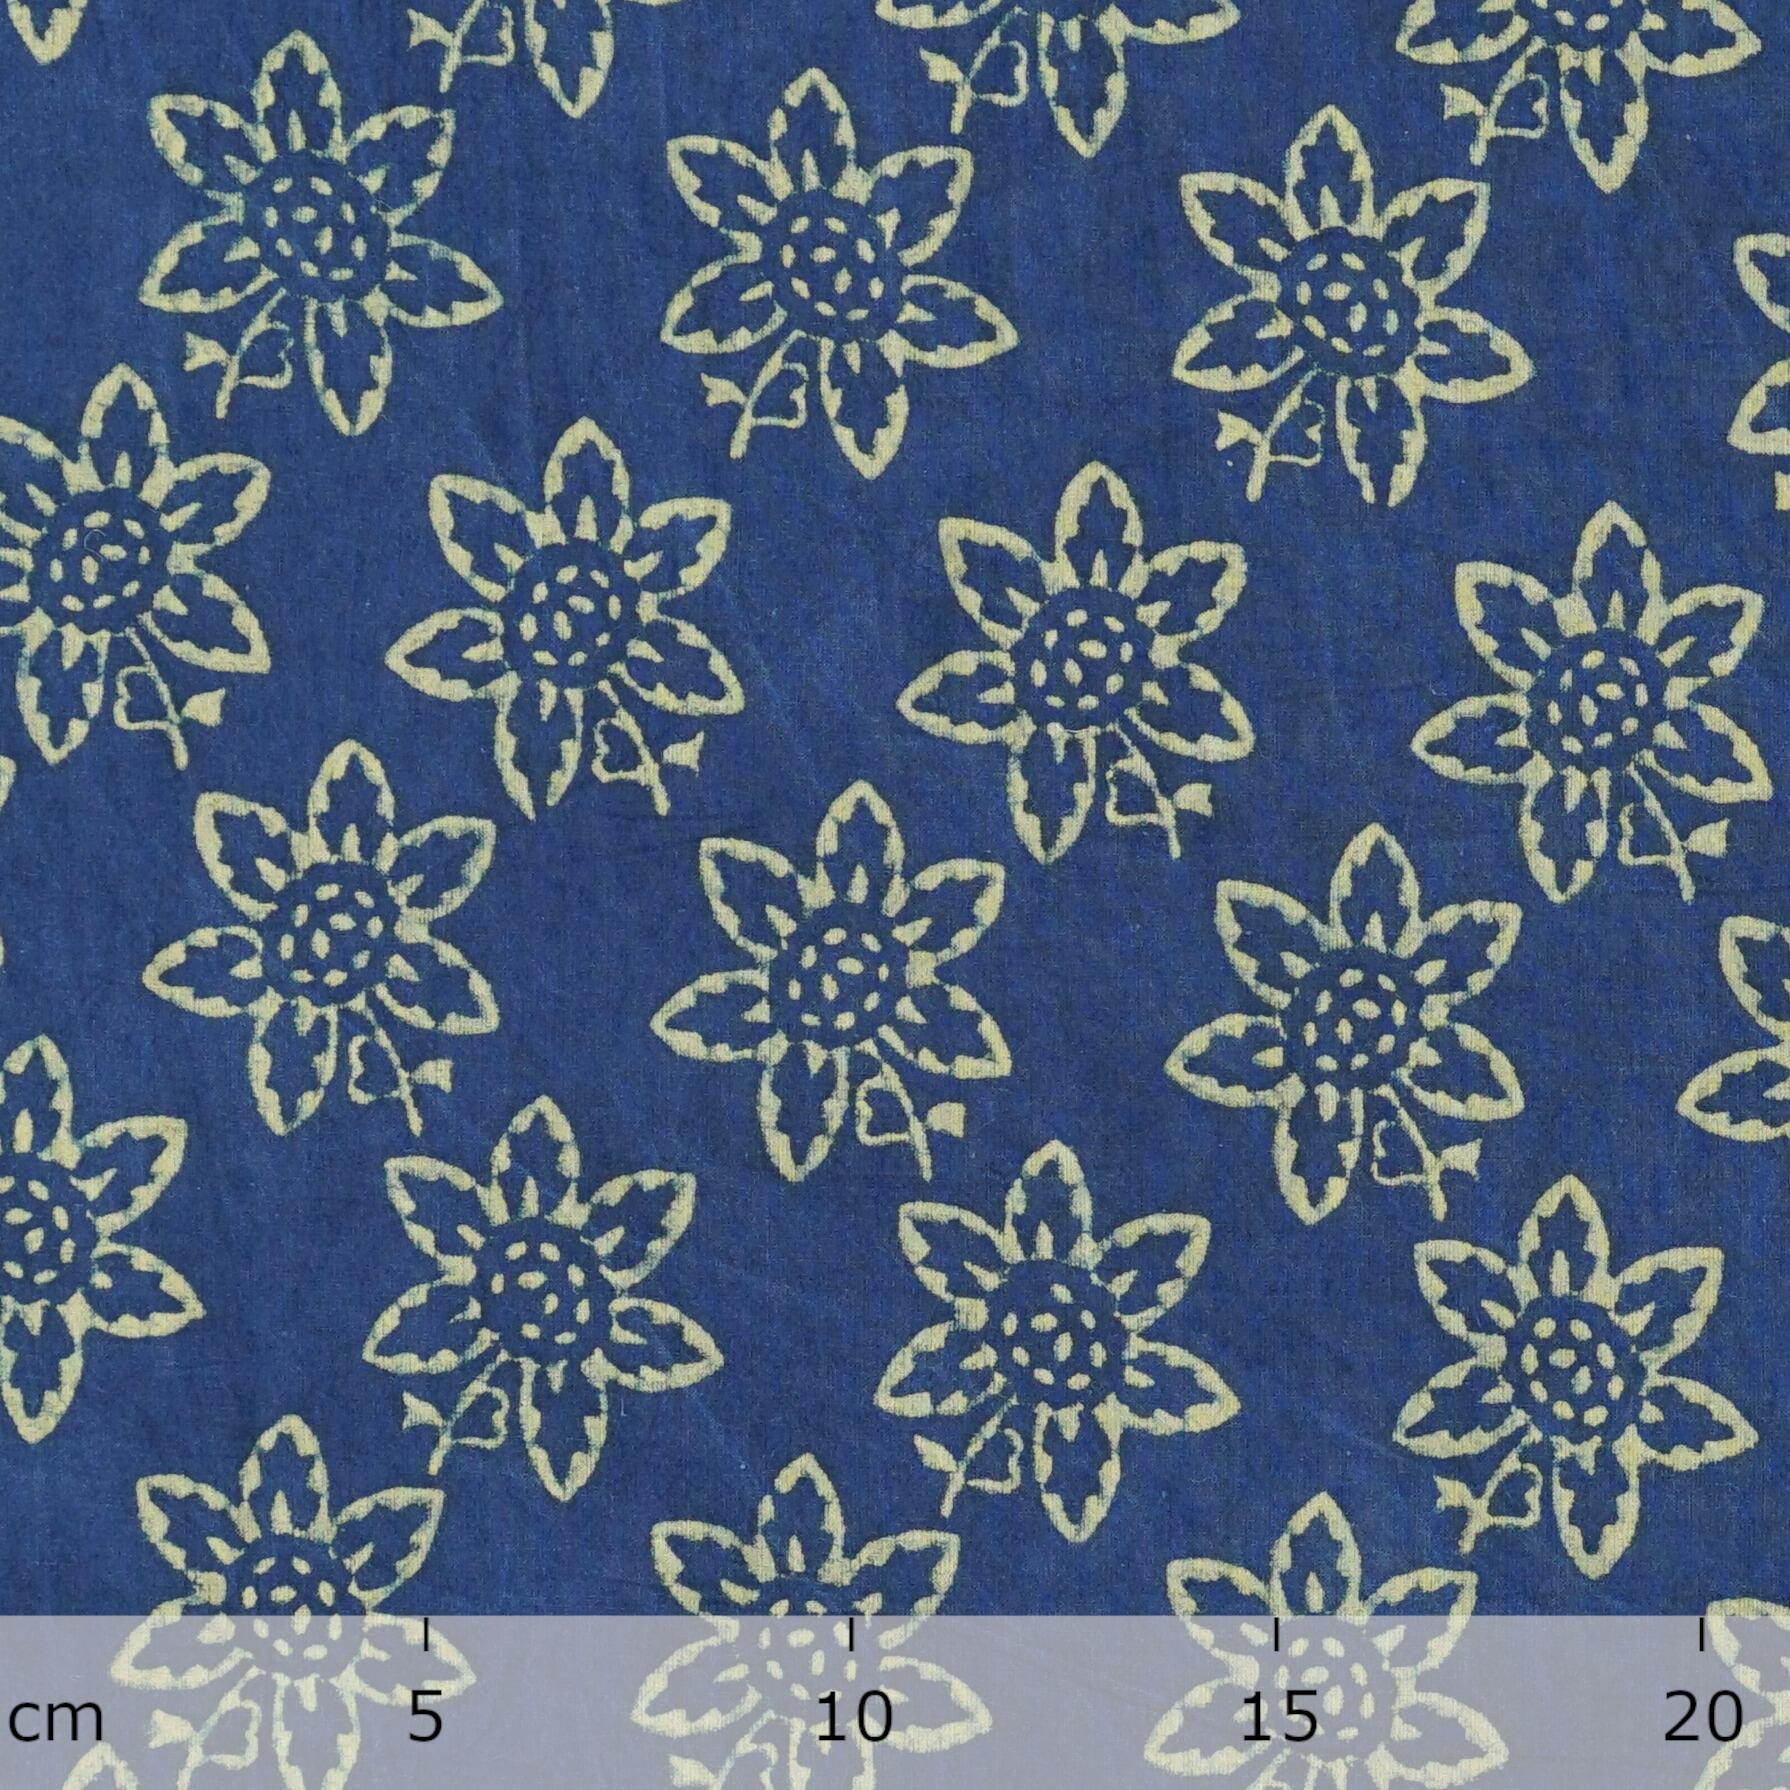 4 - AHM55 - Block-Printed Fabric - Flower Print - Indigo Blue & Tamarisk Yellow - Ruler